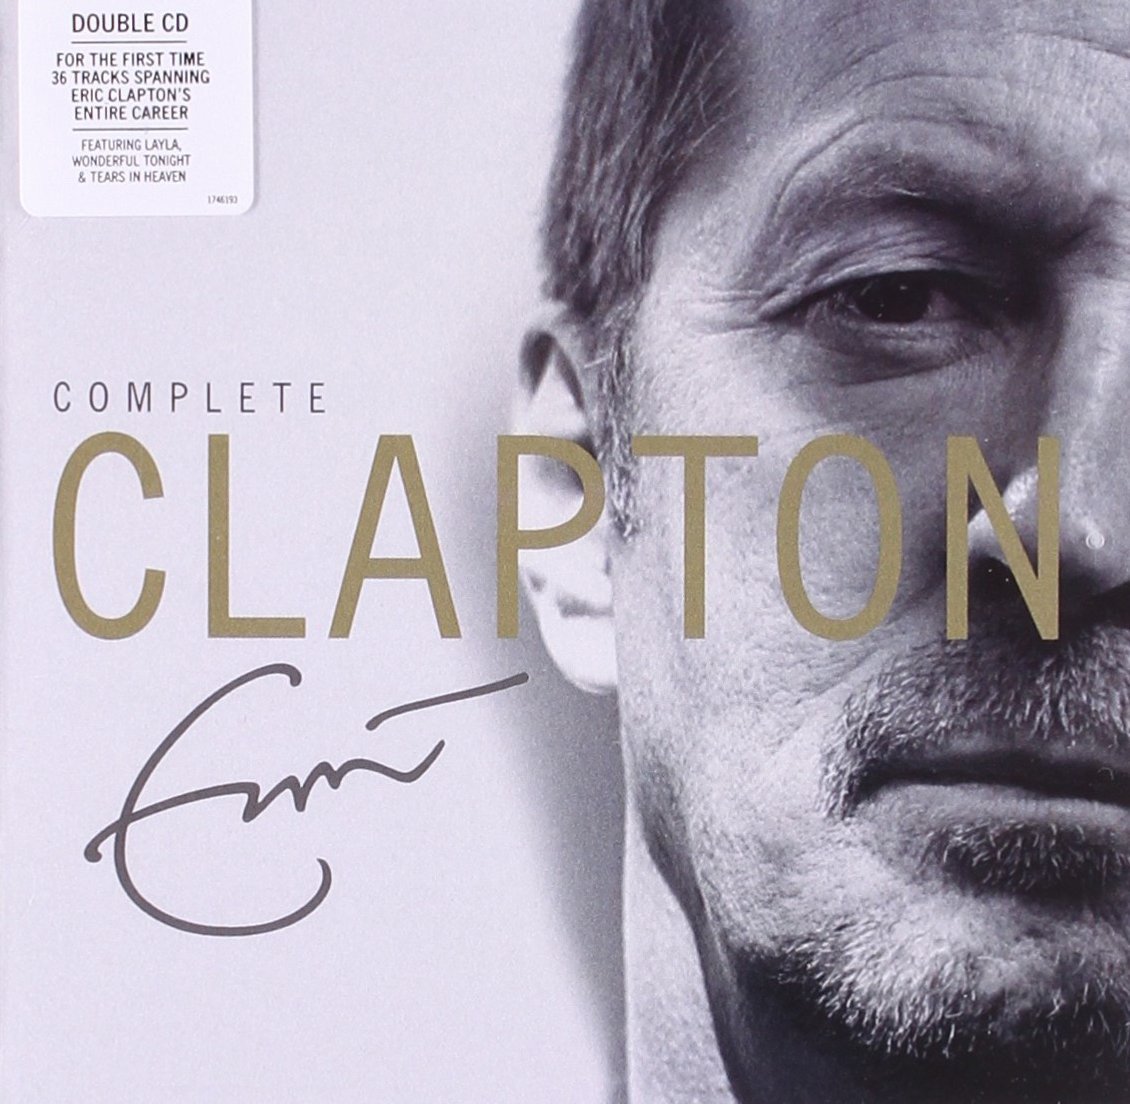 Eric Clapton - Complete Clapton (2 CD) (Music CD)